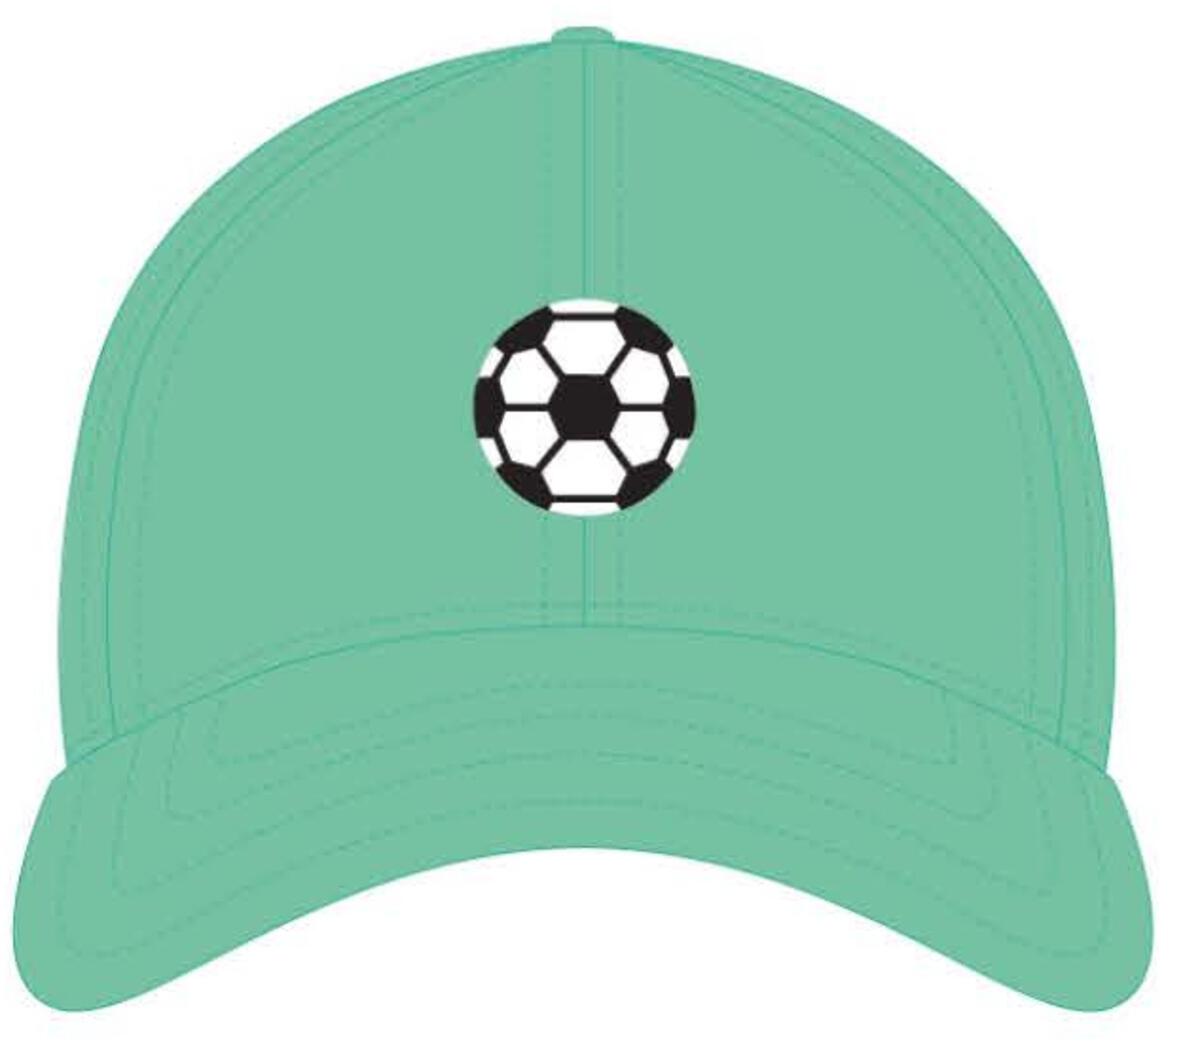 Soccer Needlepoint on MInt Hat